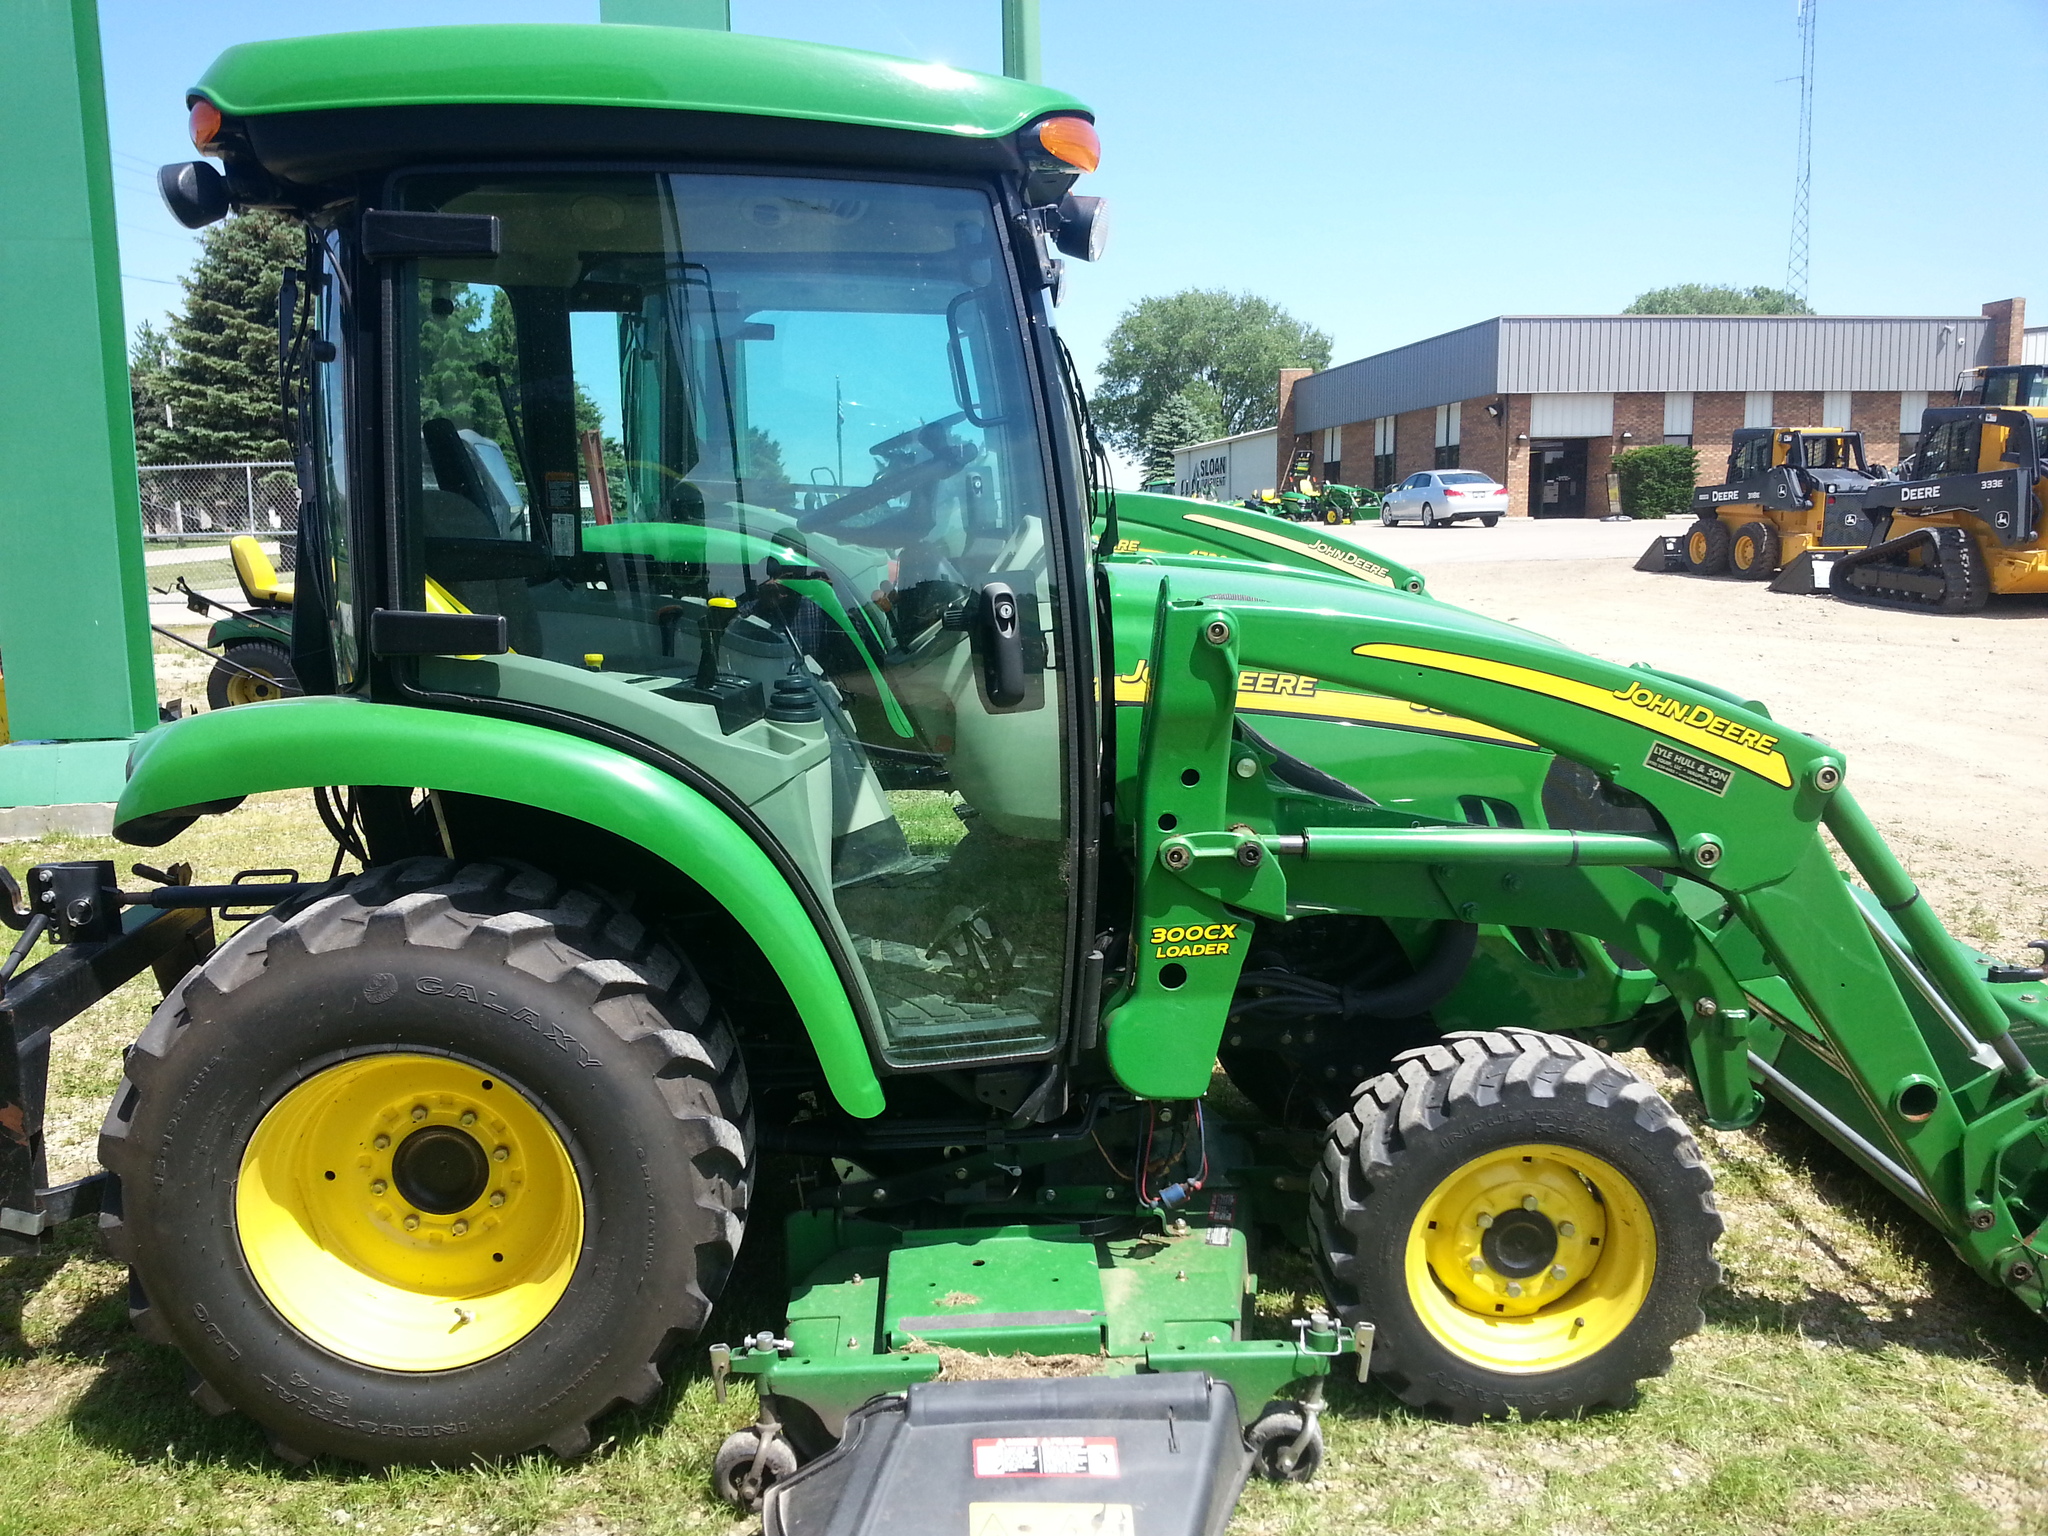 John Deere 3520 Compact Utility Tractors for Sale | [47457]